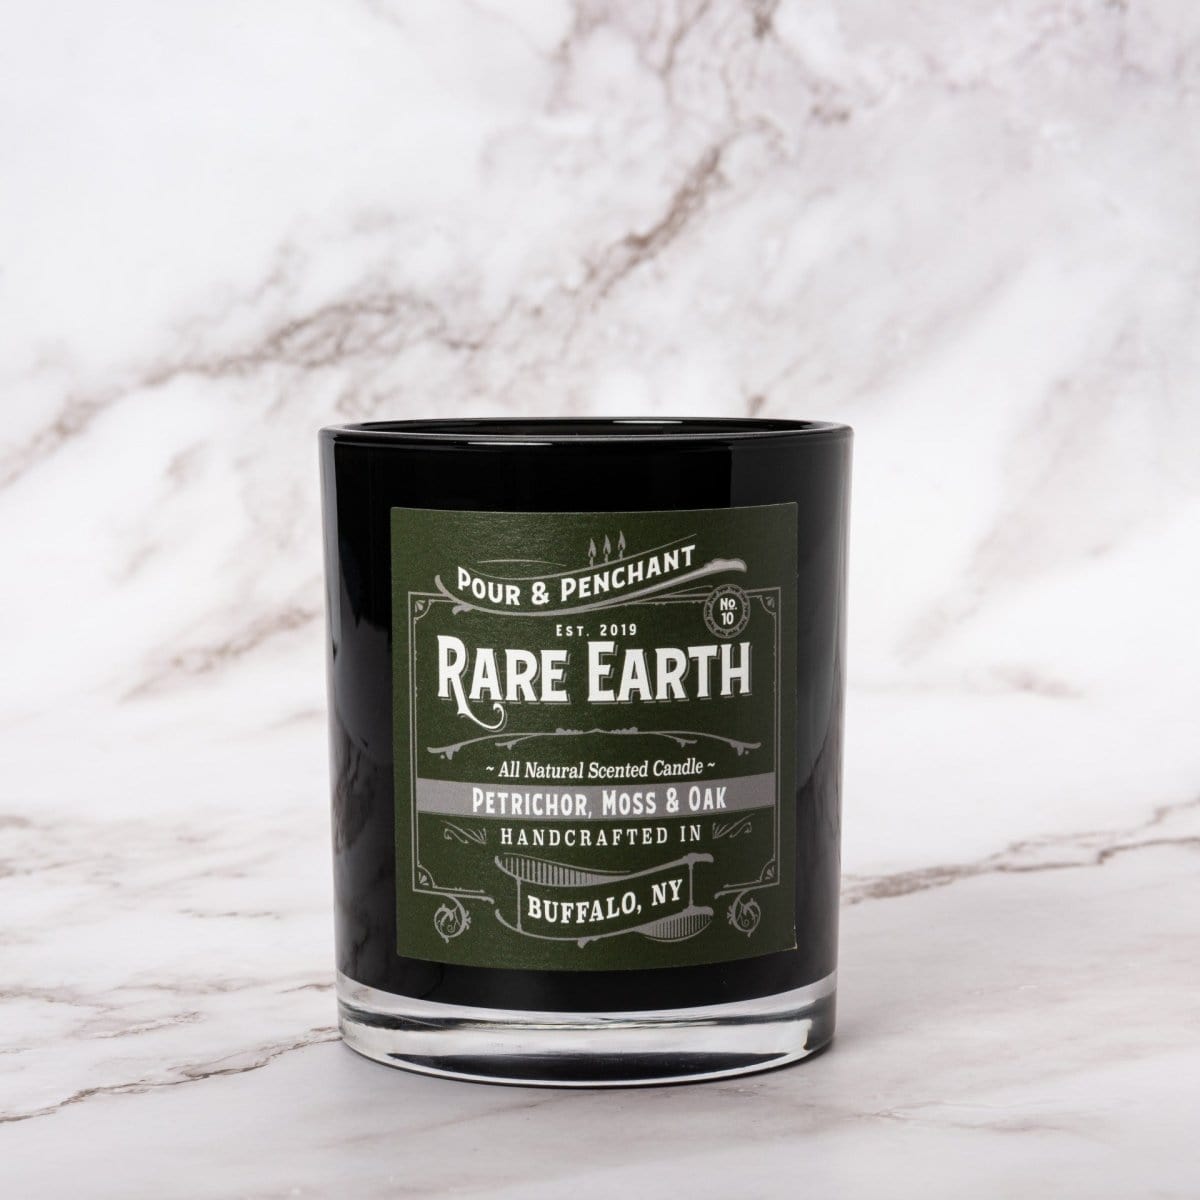 Pour & Penchant 13 oz Scented Candle - RARE EARTH - Petrichor, Reindeer Moss & Golden Oak